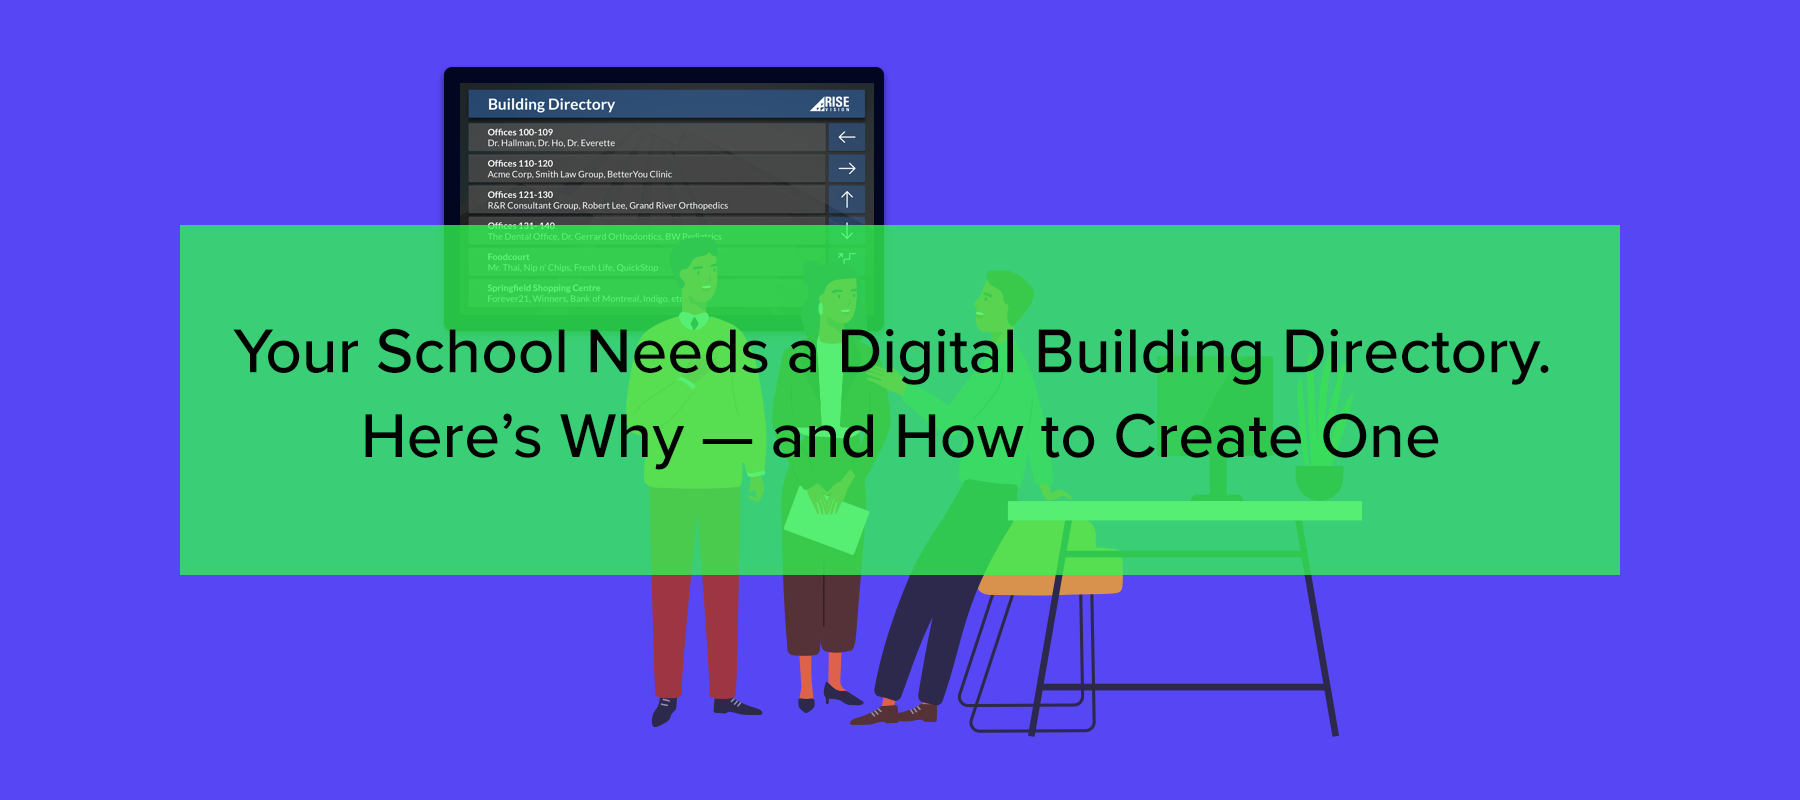 Your School Needs a Digital Building Directory